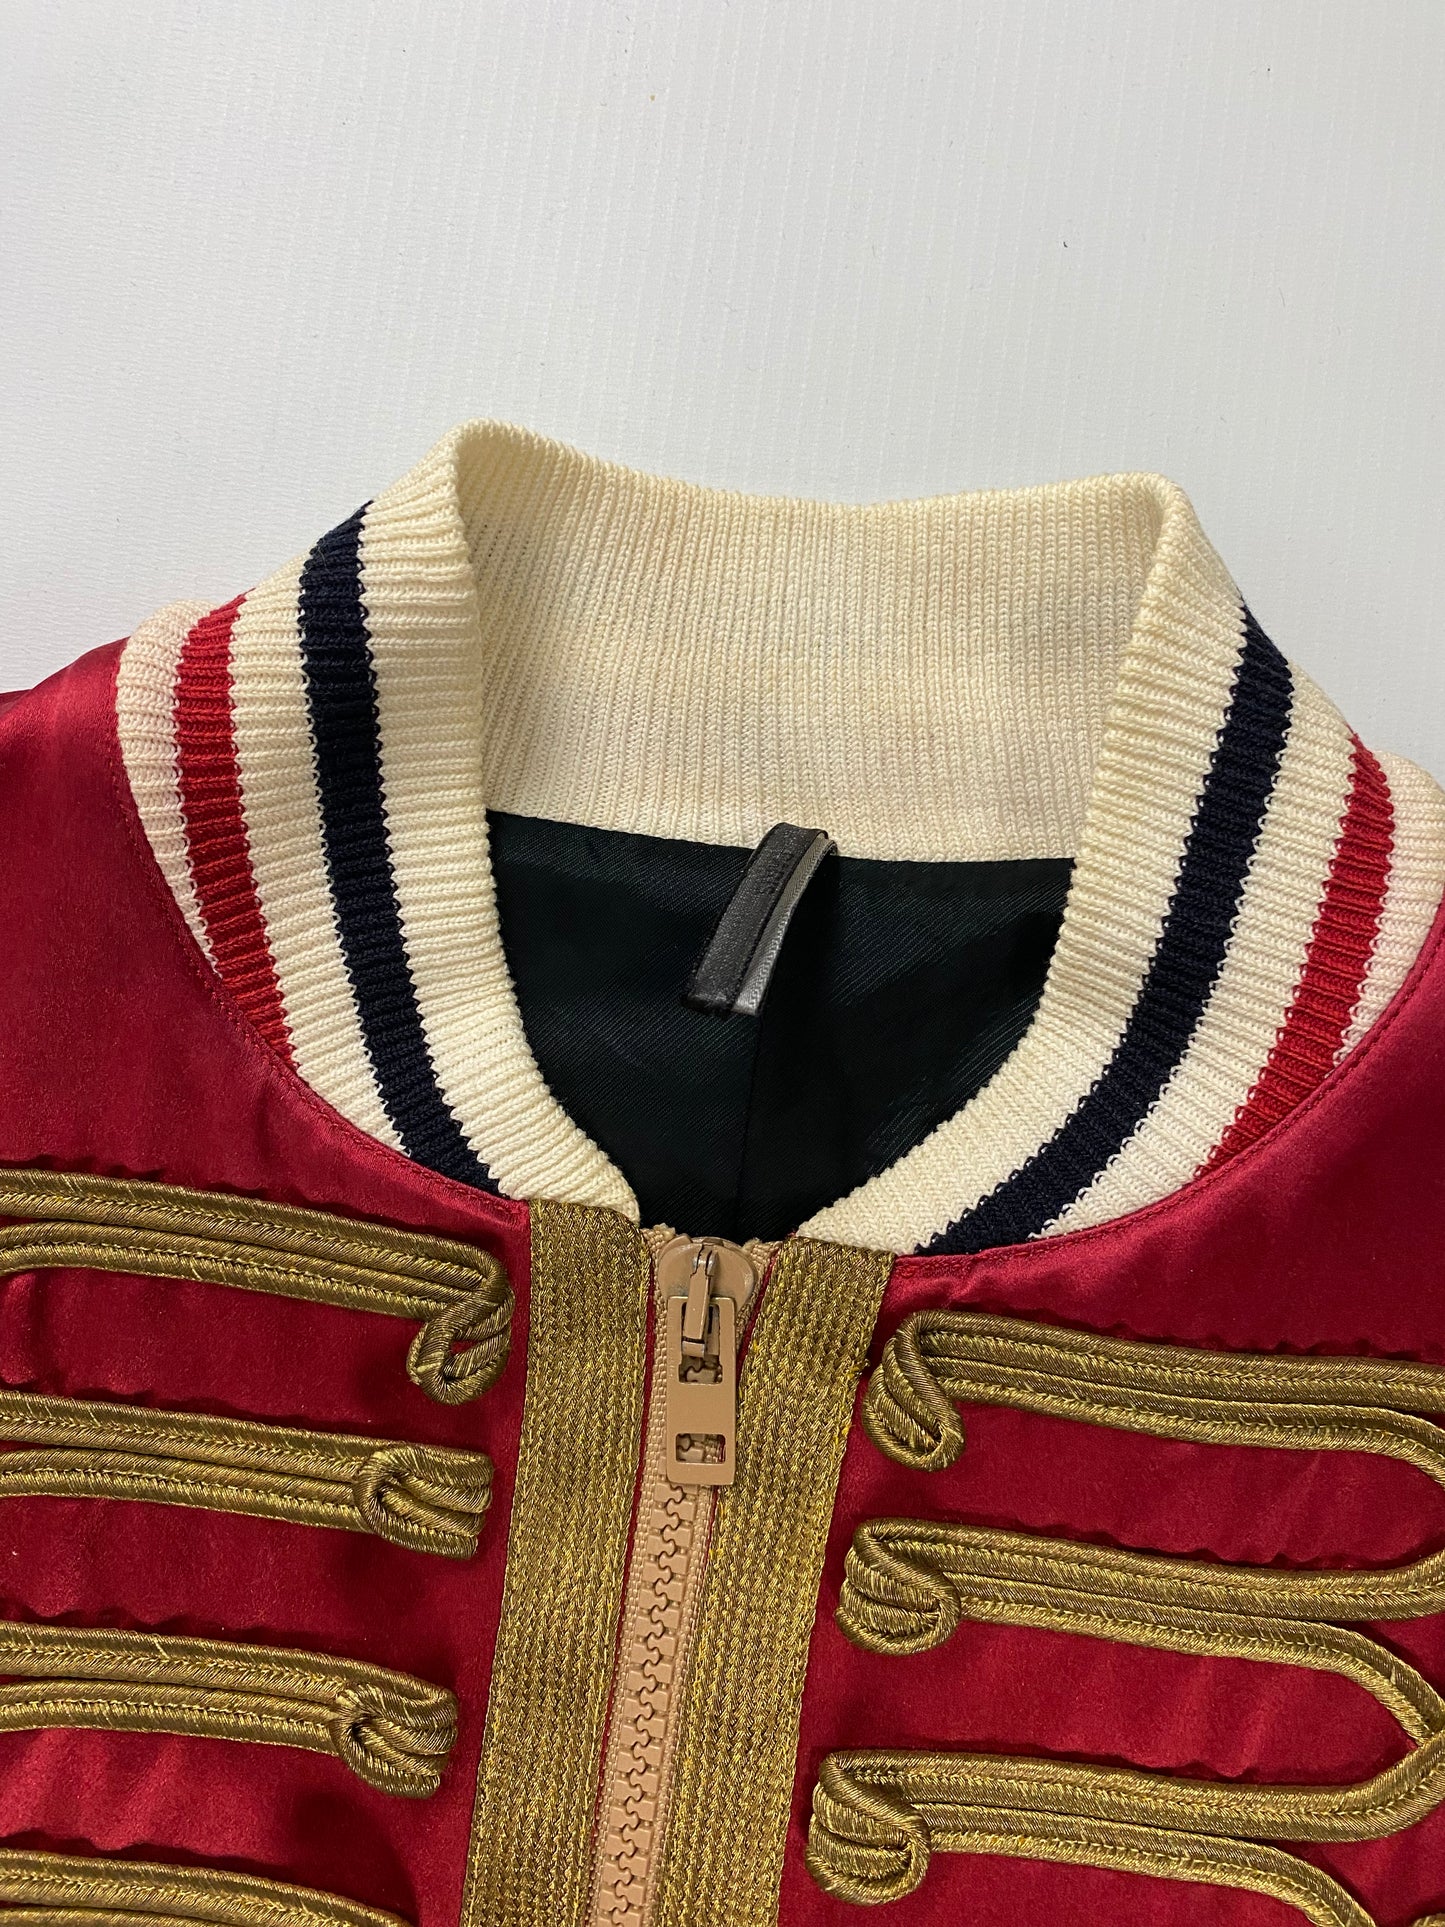 Dior Homme SS06 napoleon silk jacket SZ:46